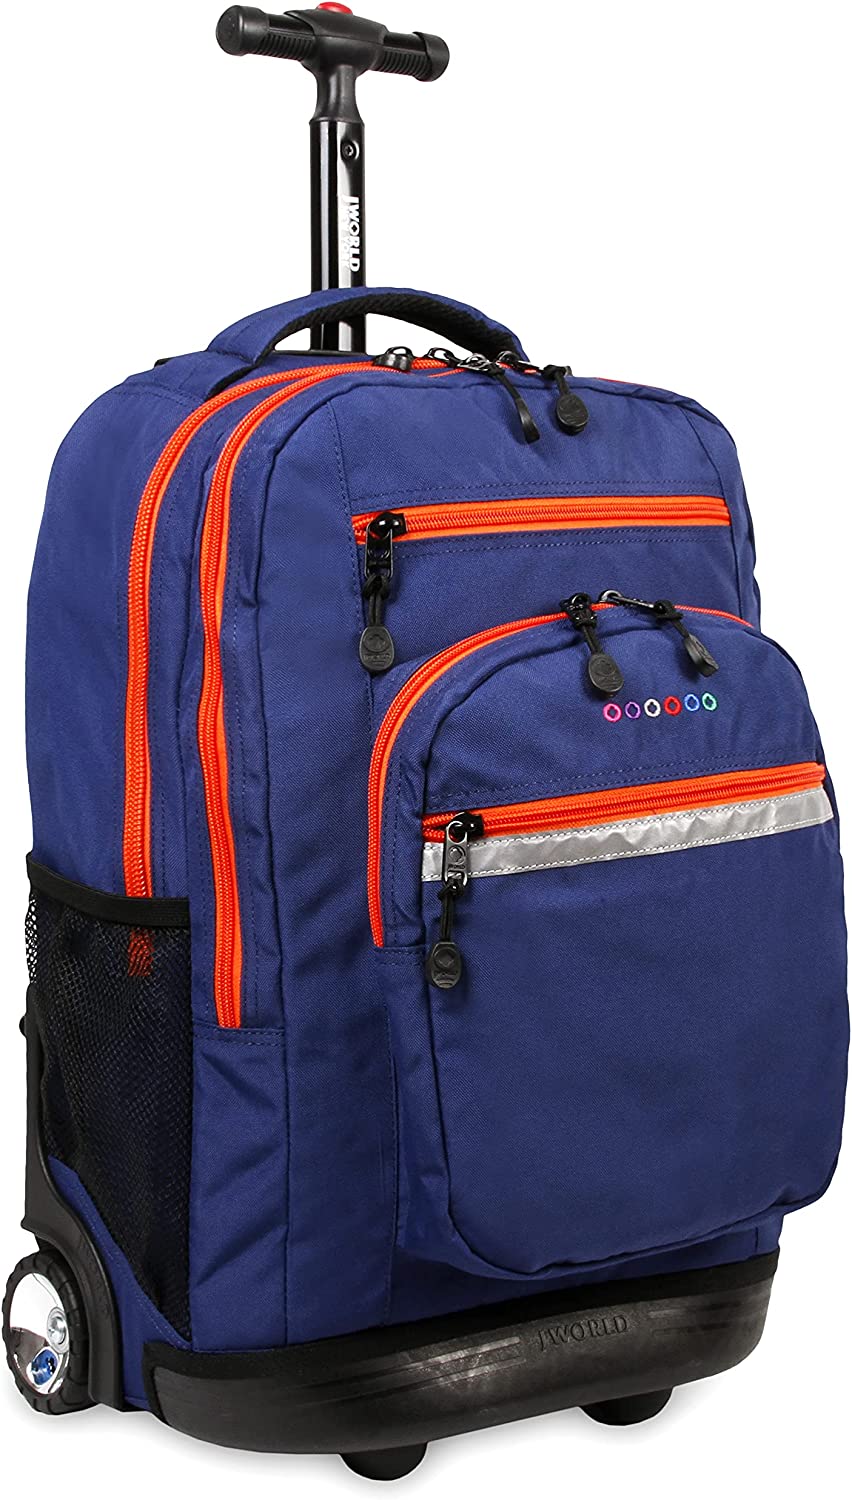 Review of Sundance Rolling Backpack Girl Boy Roller Bookbag, Navy, One Size